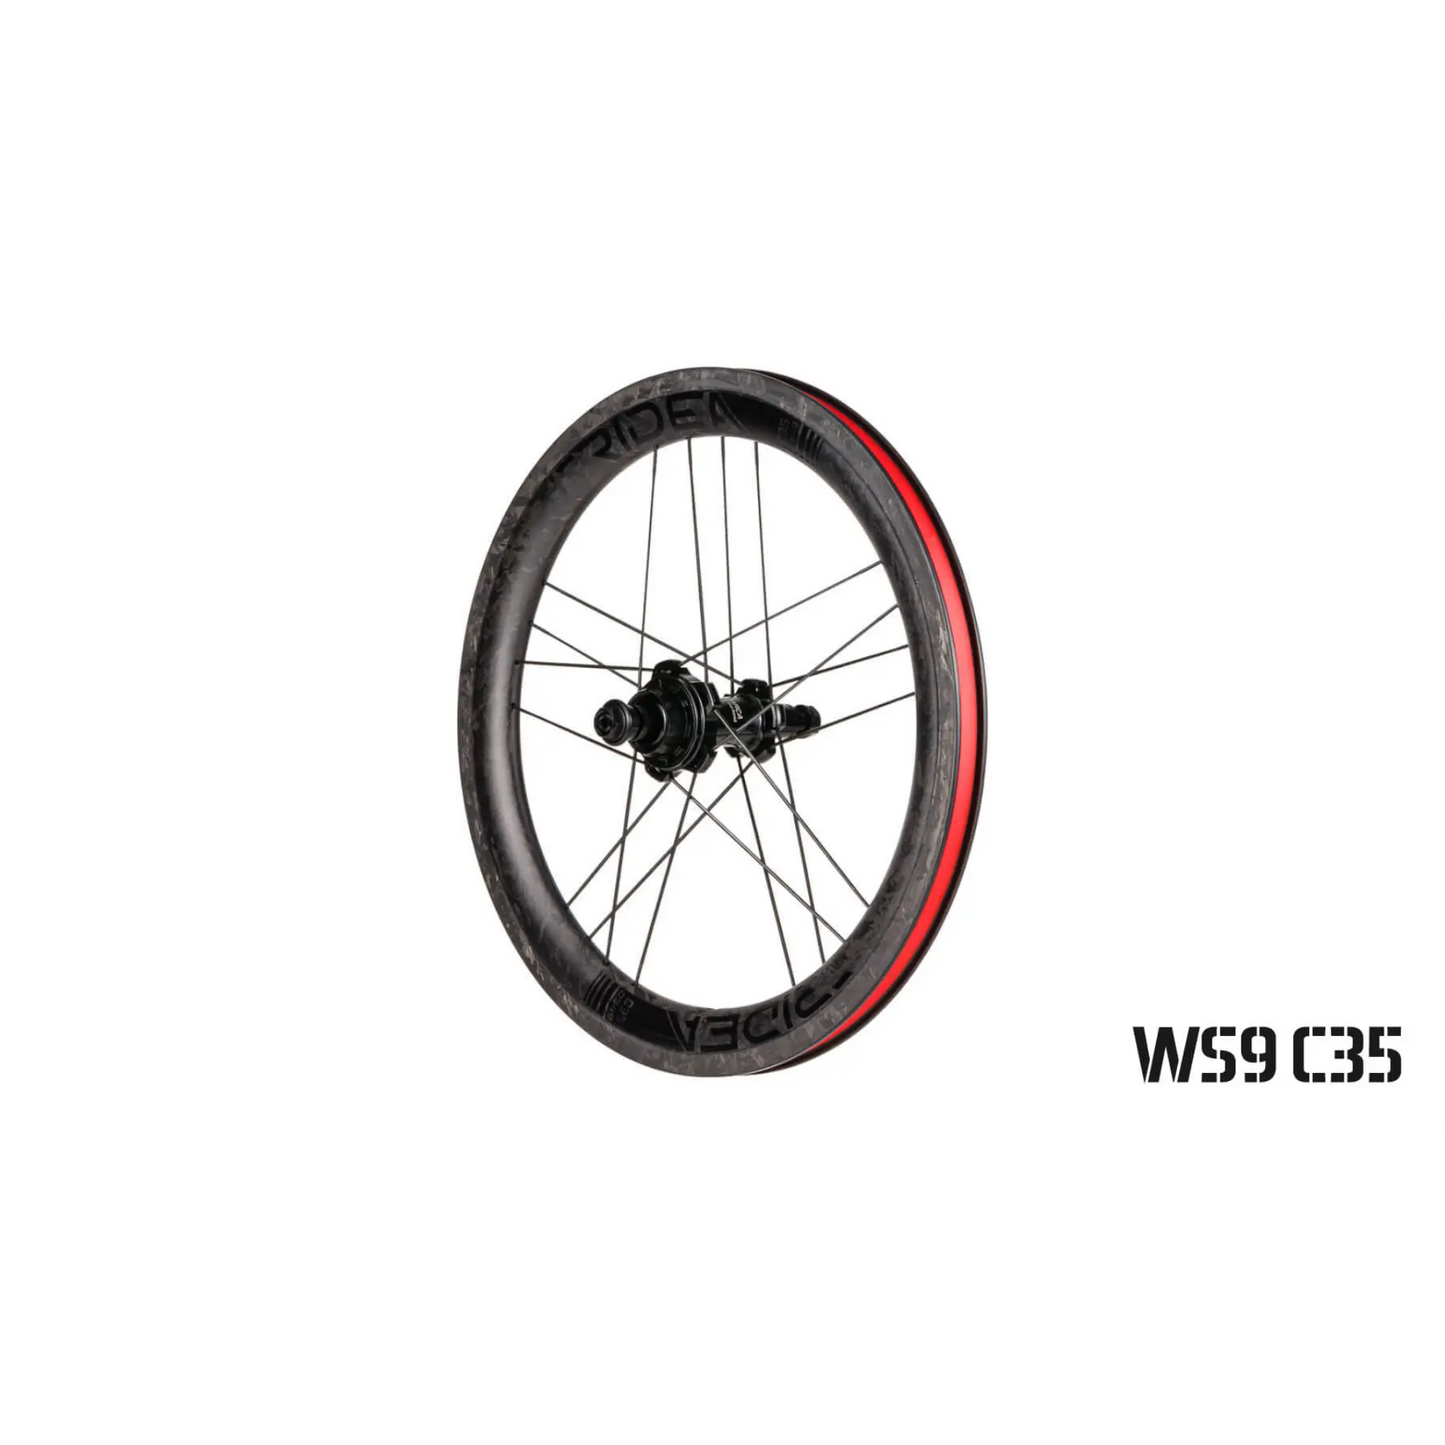 RIDEA - C35 Carbon wheels ISO 349 (Brompton) 小布 碳刀輪組